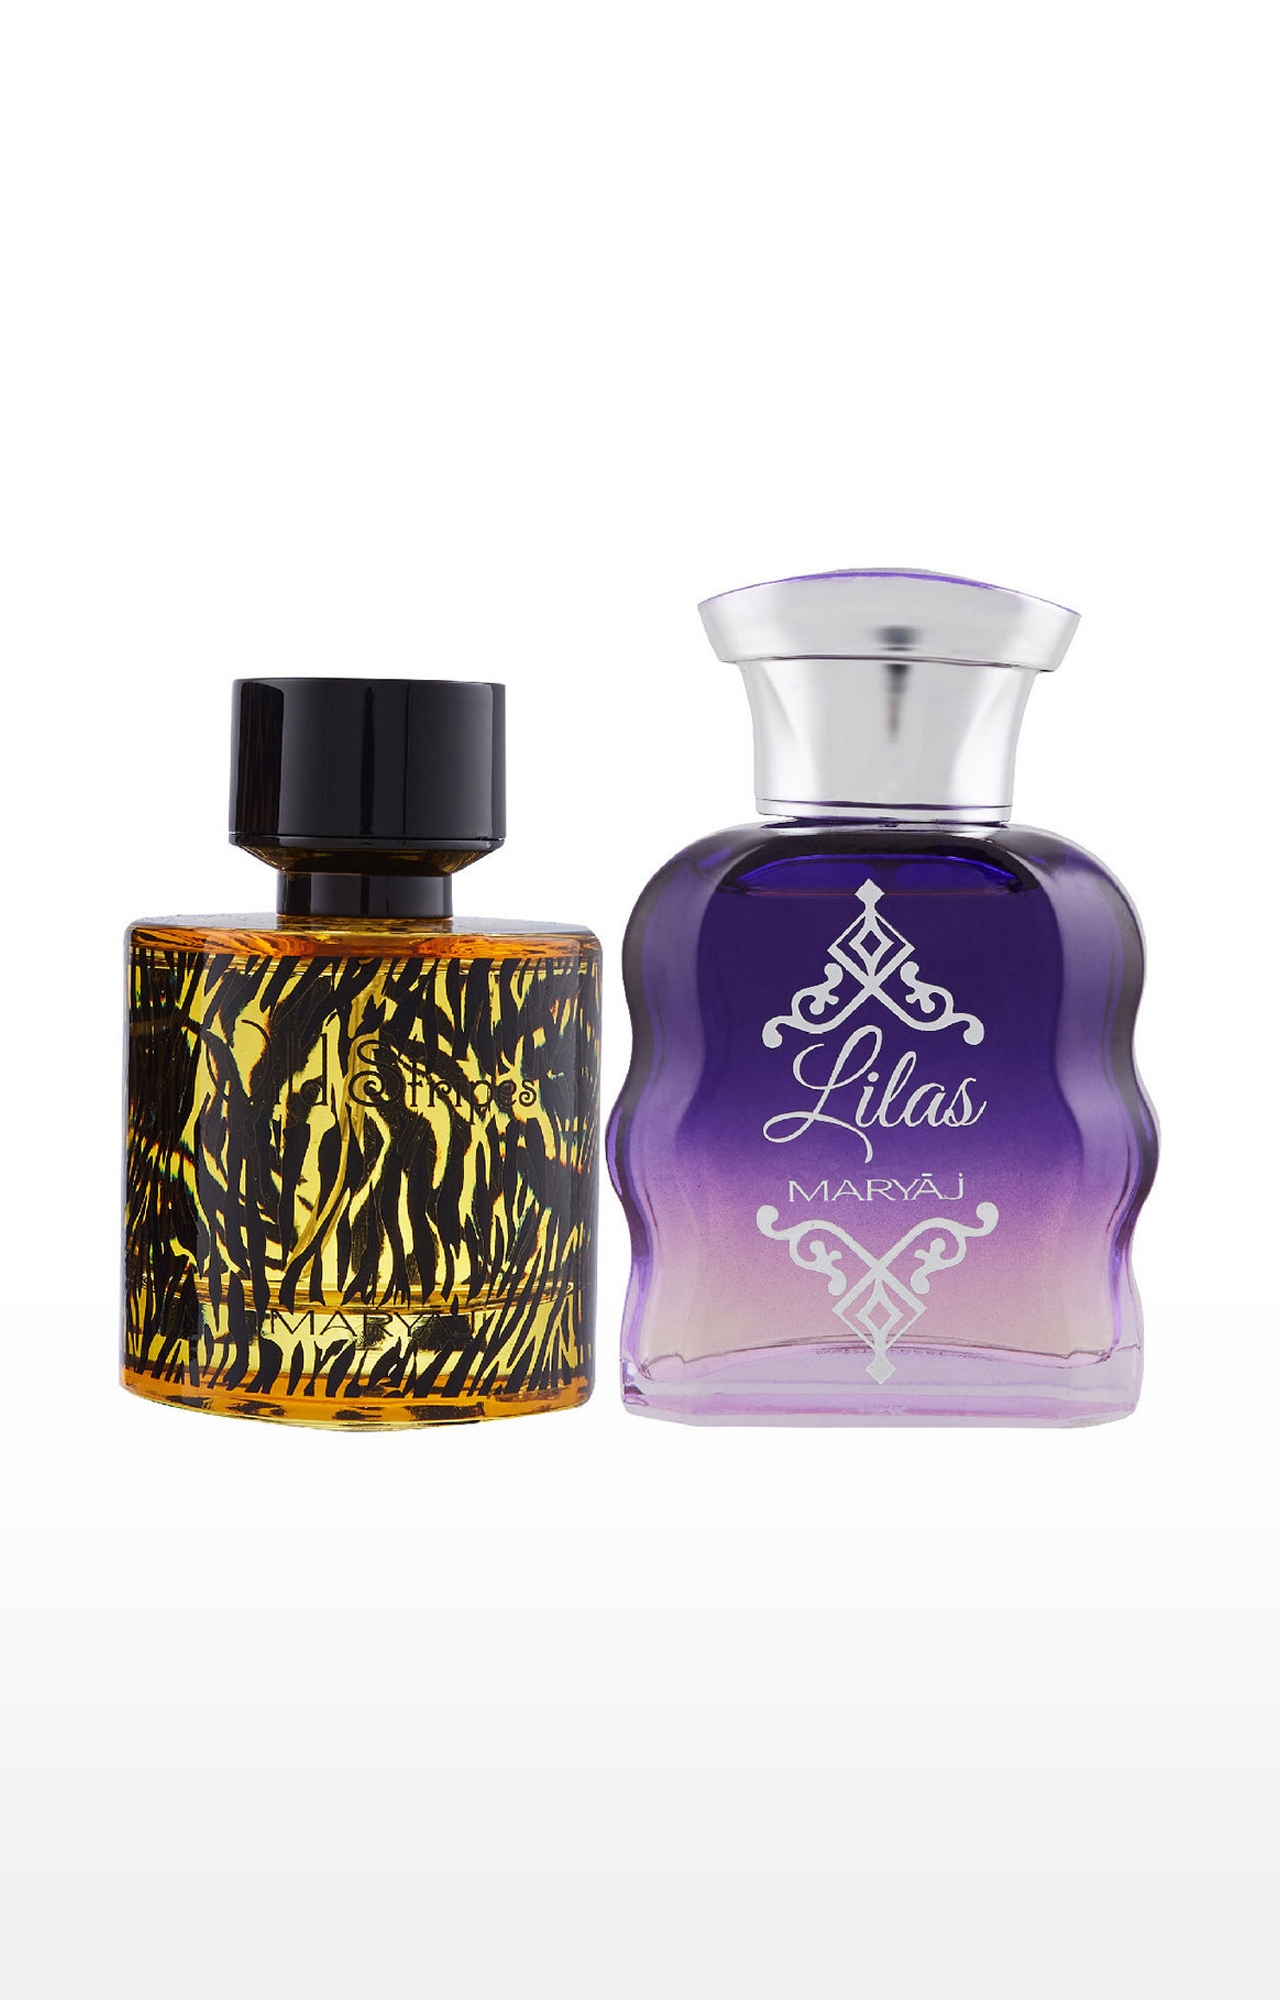 Maryaj | Maryaj Wild Stripes Eau De Parfum Aromatic Oriental Perfume 100ml for Men and Maryaj Lilas Eau De Parfum Citrus Floral Perfume 100ml for Women